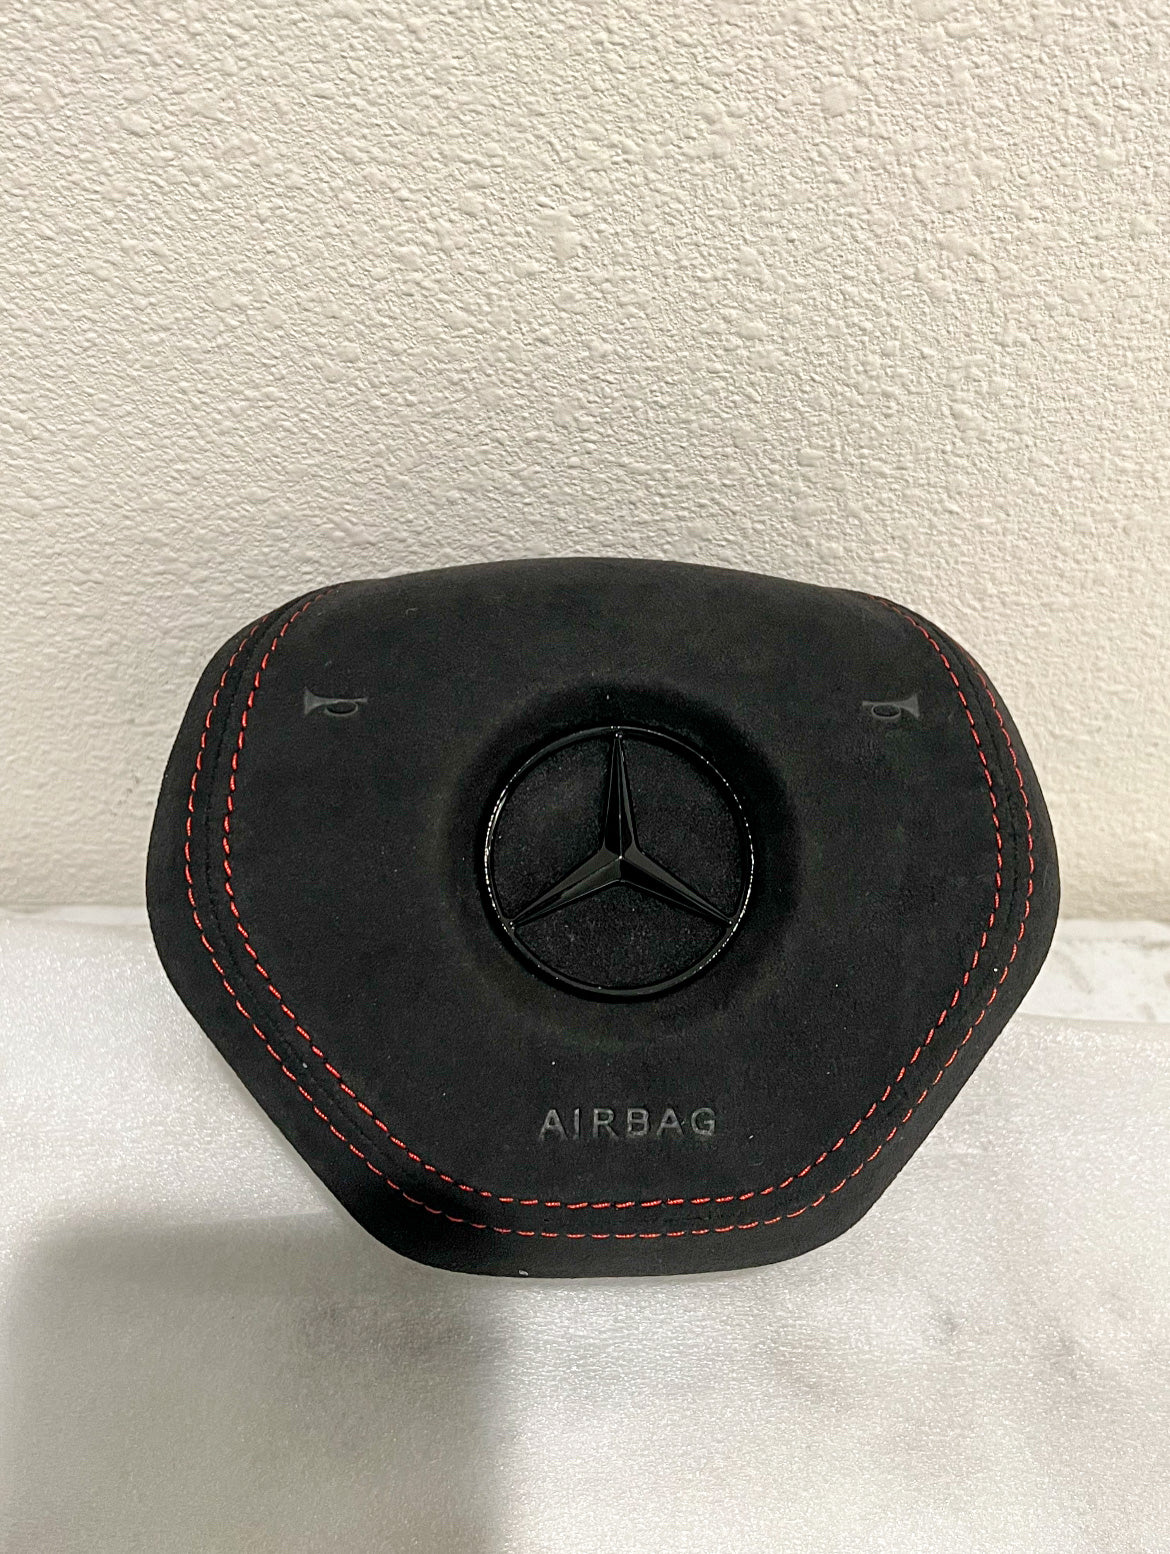 Performance Custom Airbag Covers